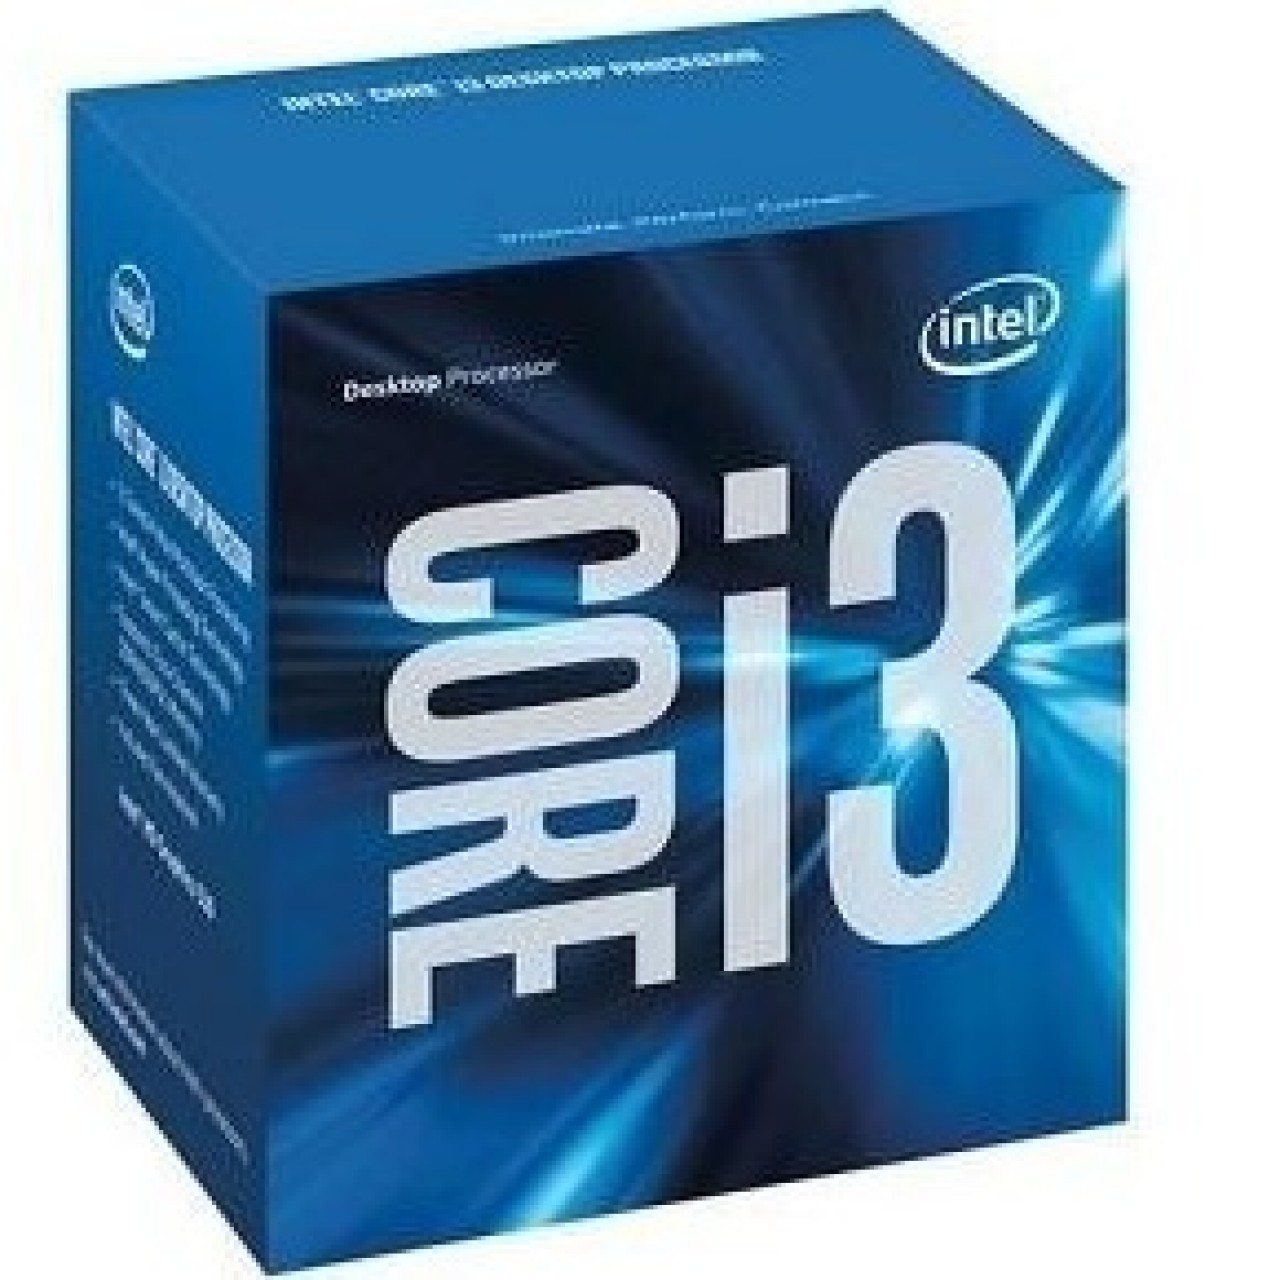 32. Intel Core Desktop Processor i3-7100 - 7th Gen Core - 3MB Cache - 3.90 GHz Speed